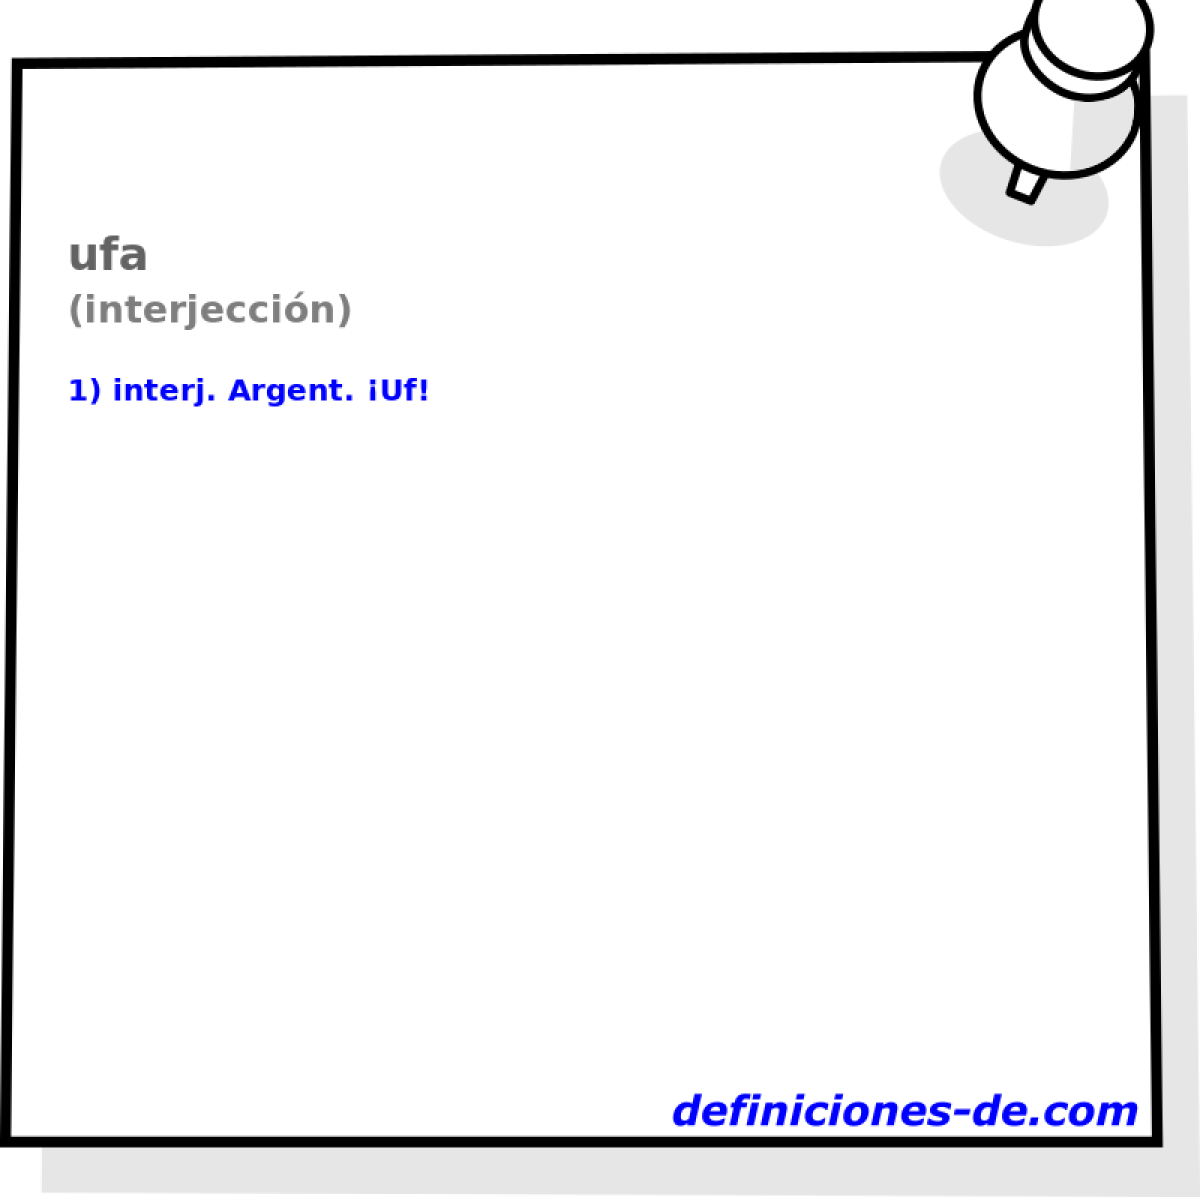 ufa (interjeccin)